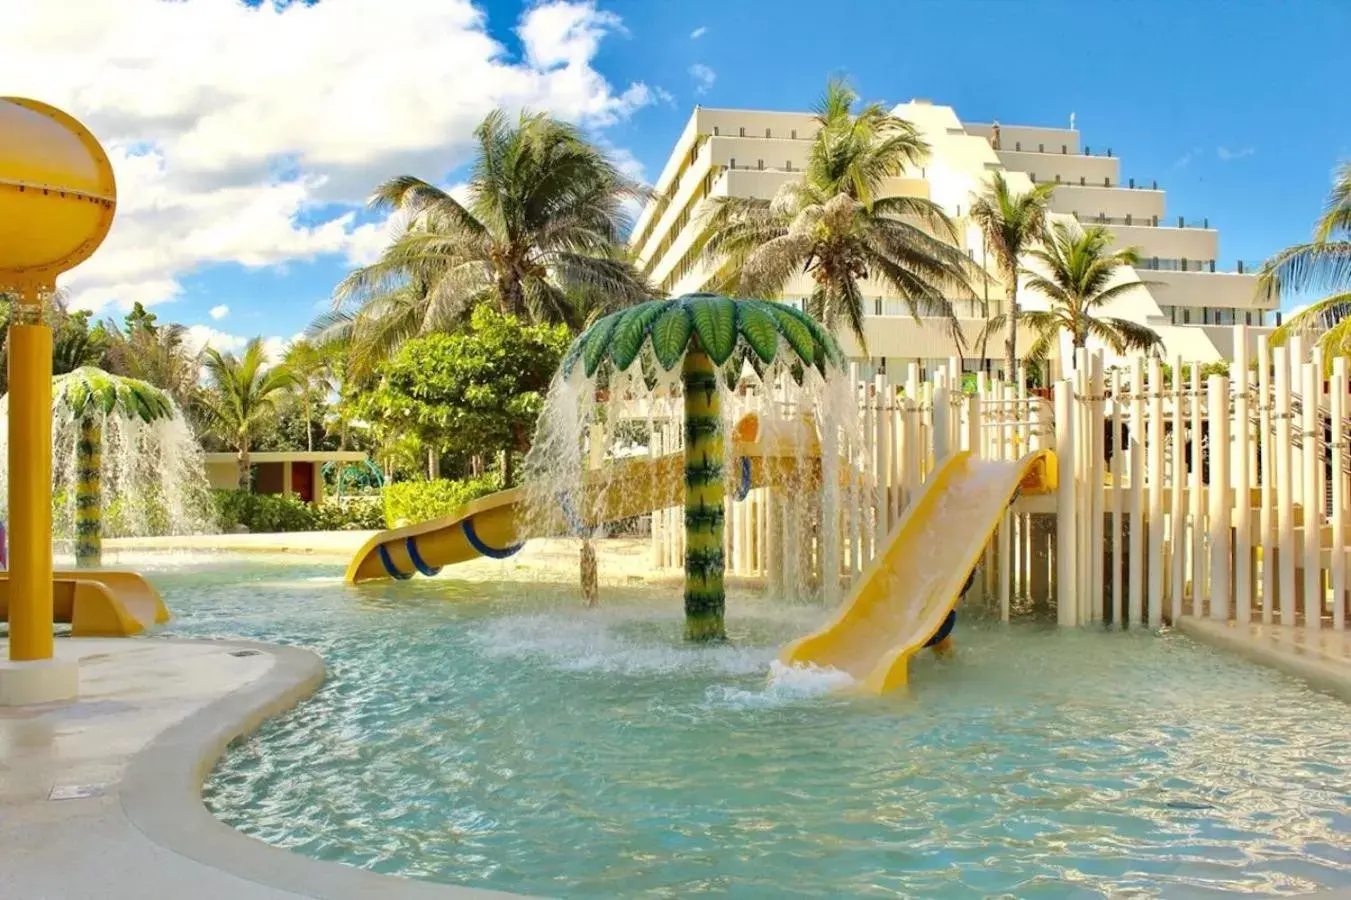 Aqua park, Water Park in Condos inside an Ocean Front Hotel Resort